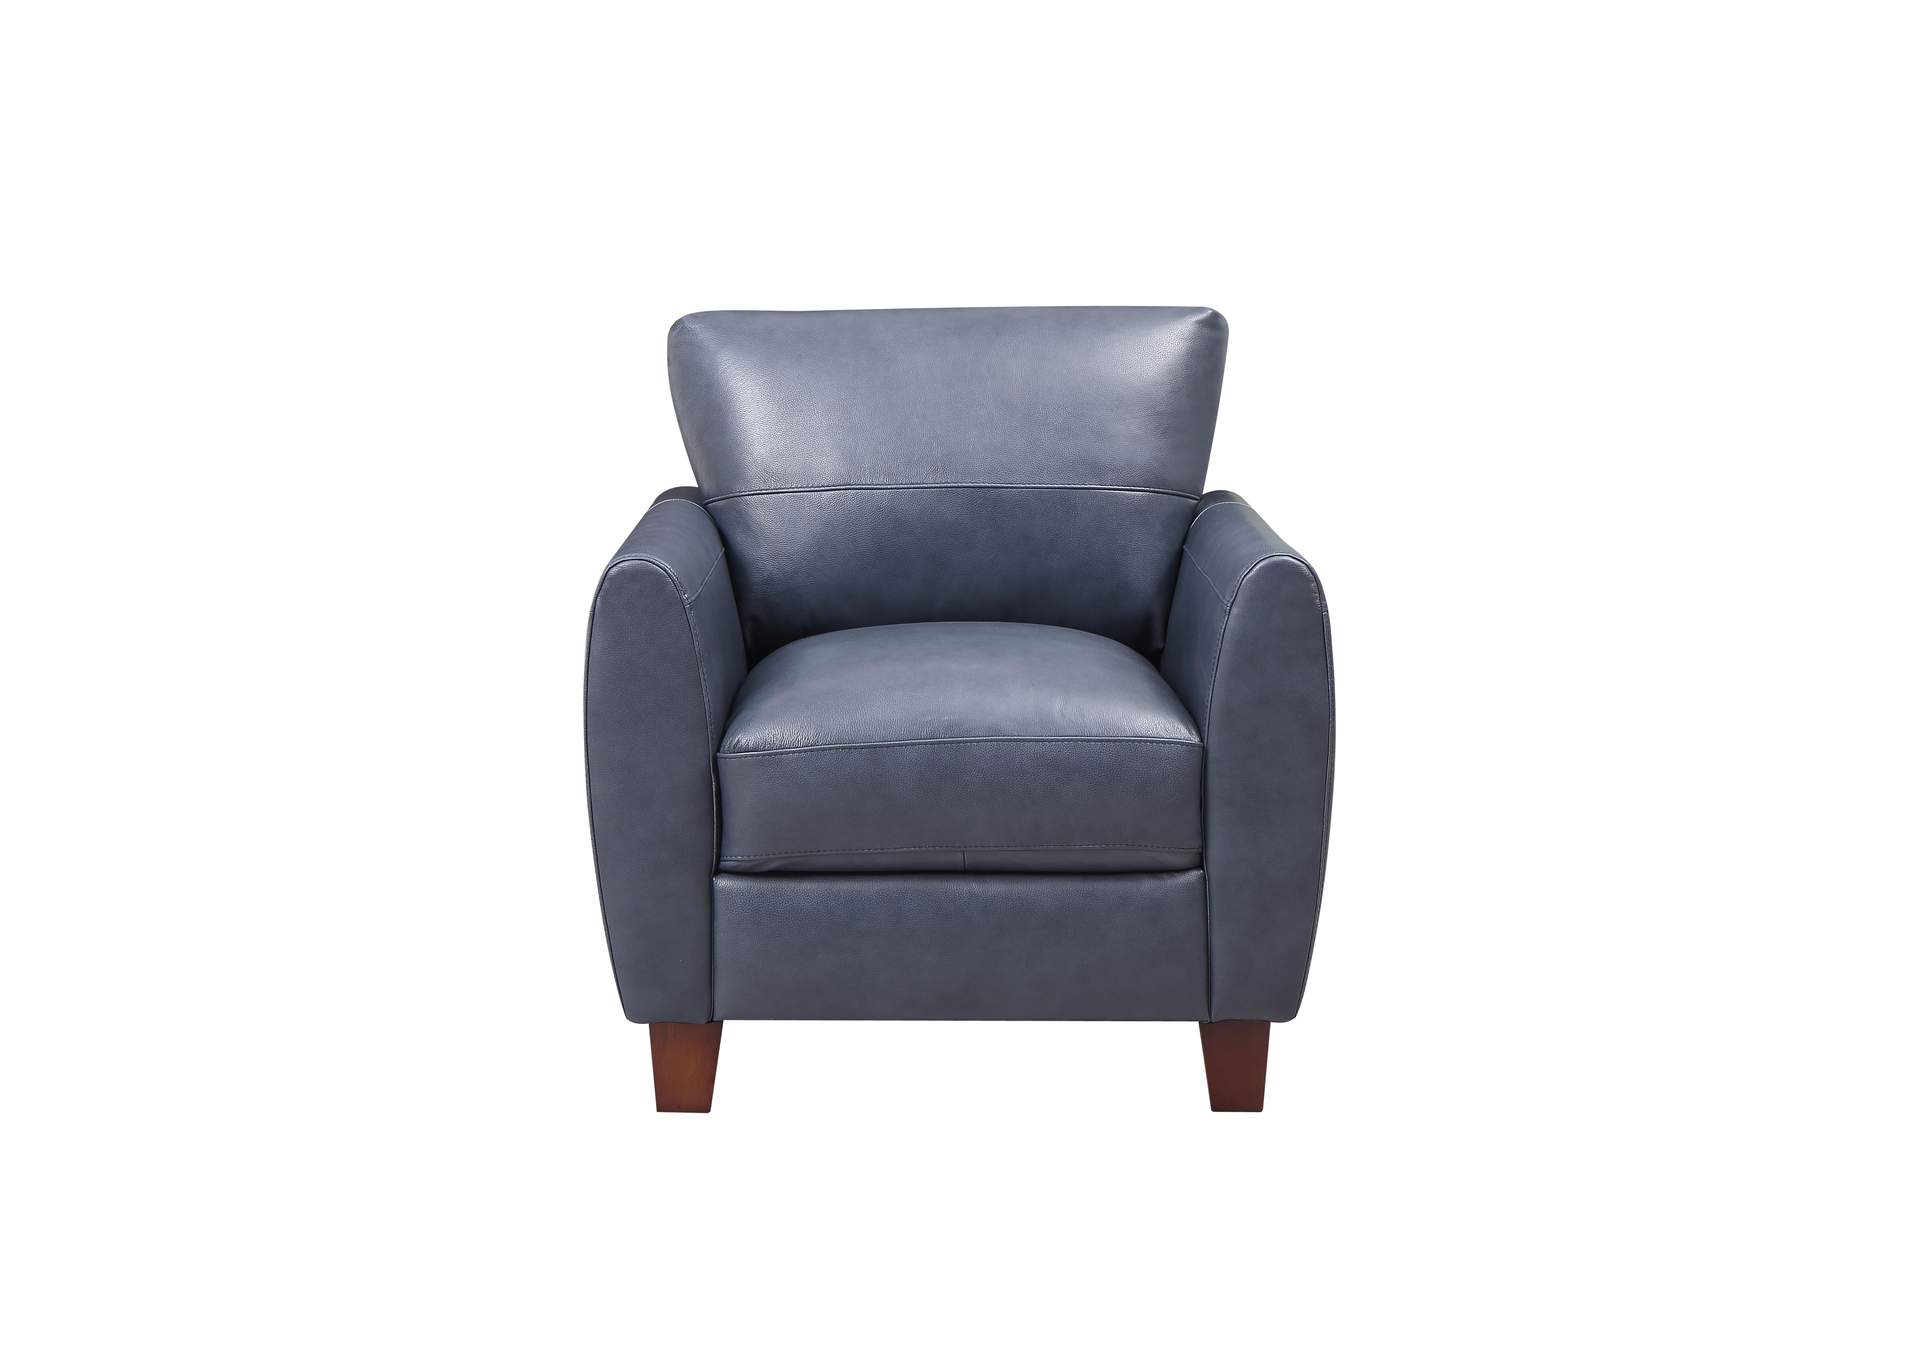 Georgetowne 6529 Traverse Chair 177147 Blue,Leather Italia USA